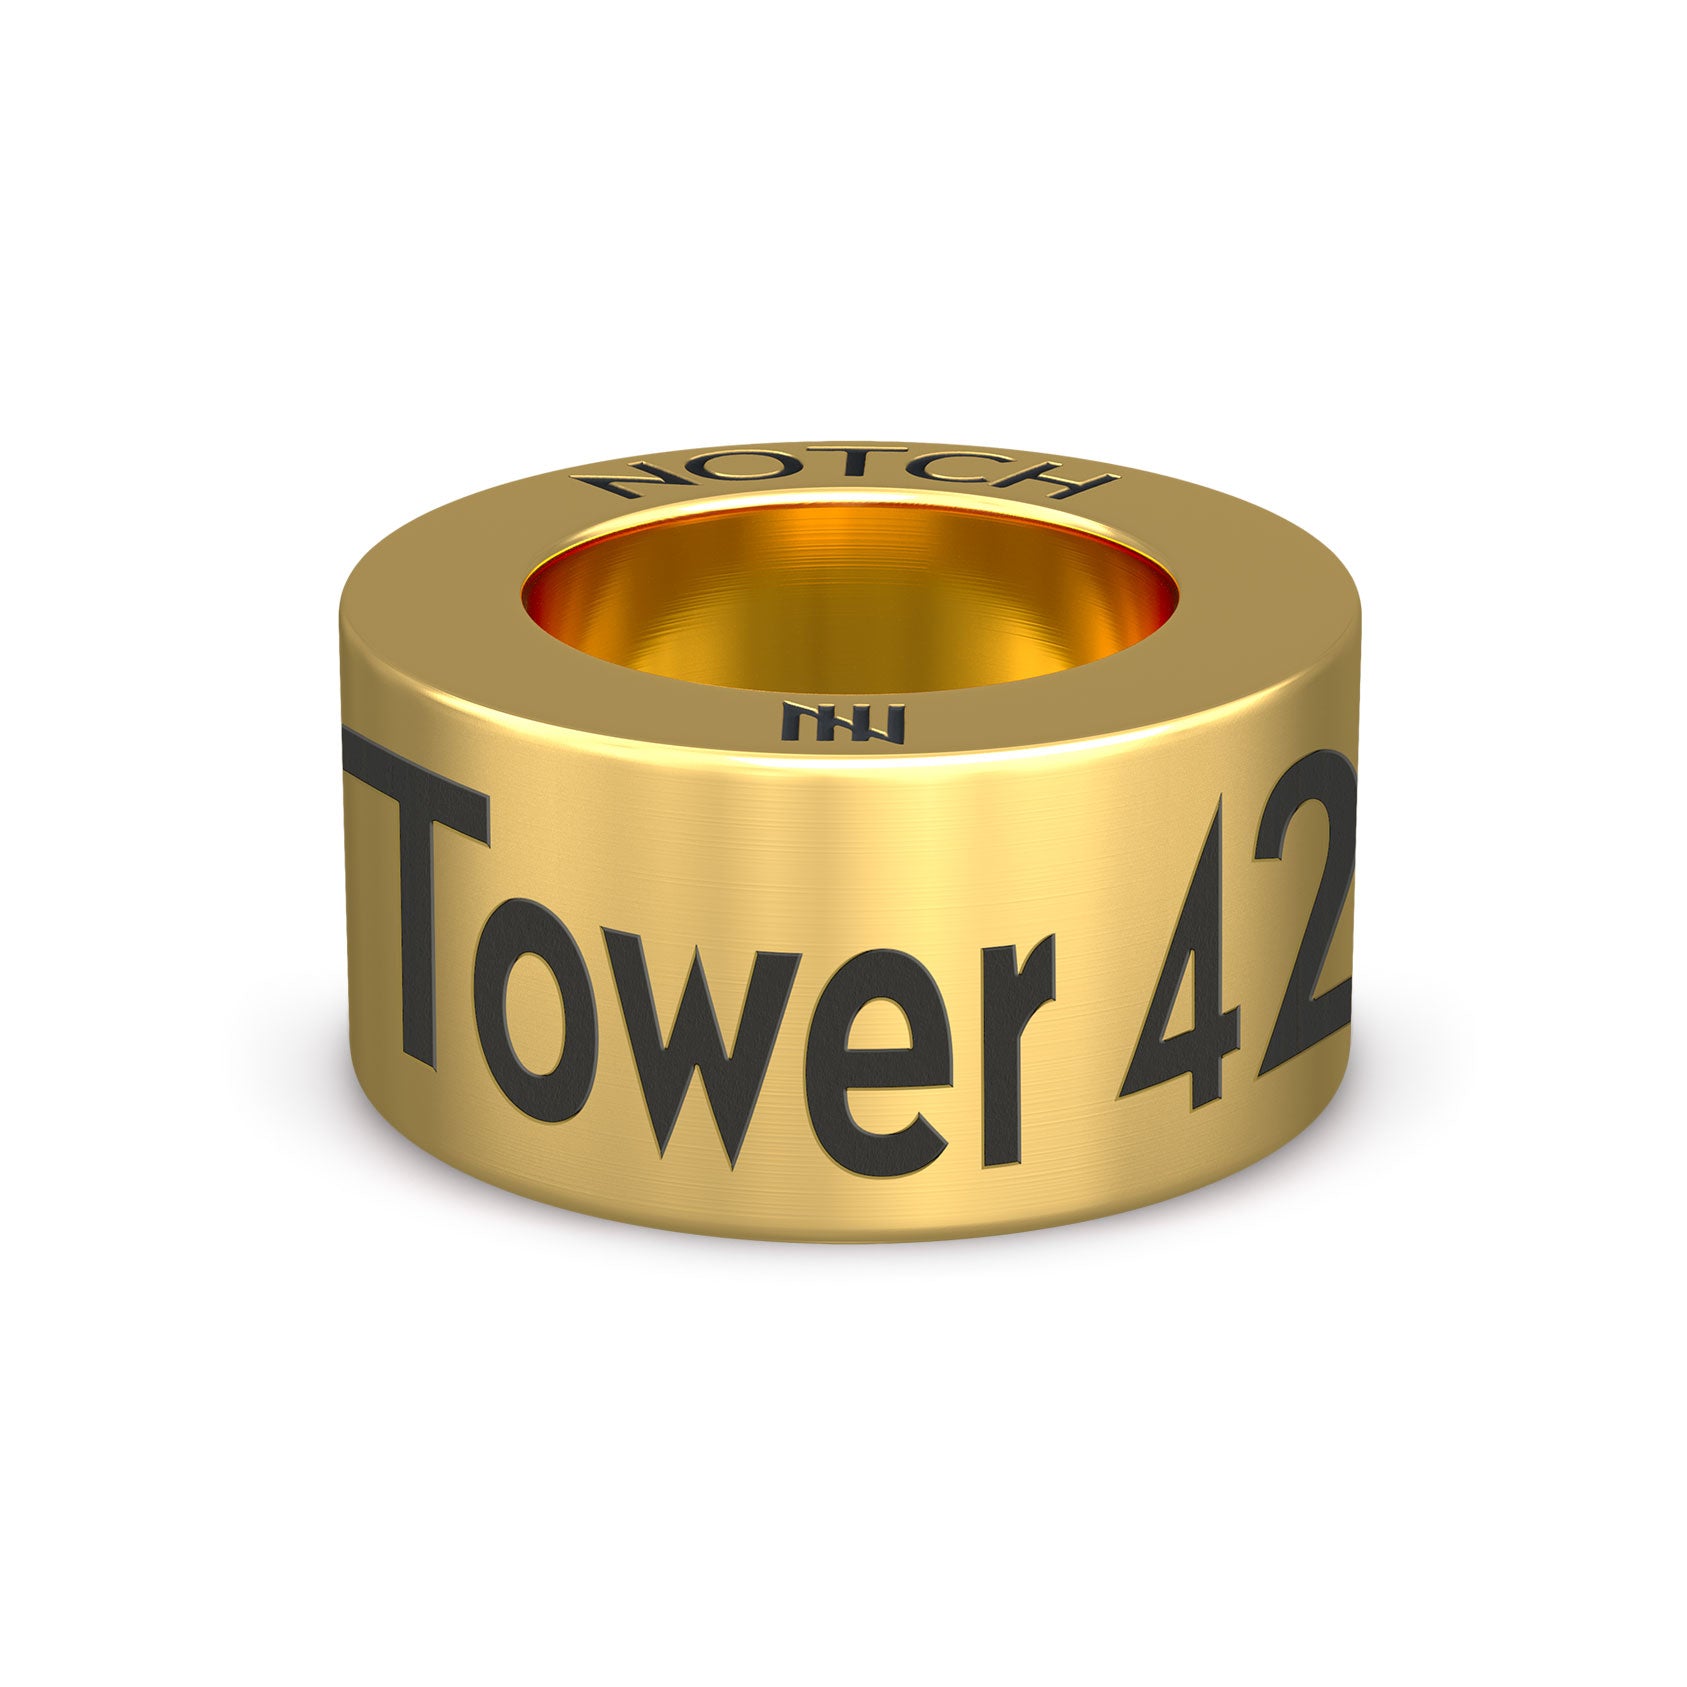 Tower 42 NOTCH Charm